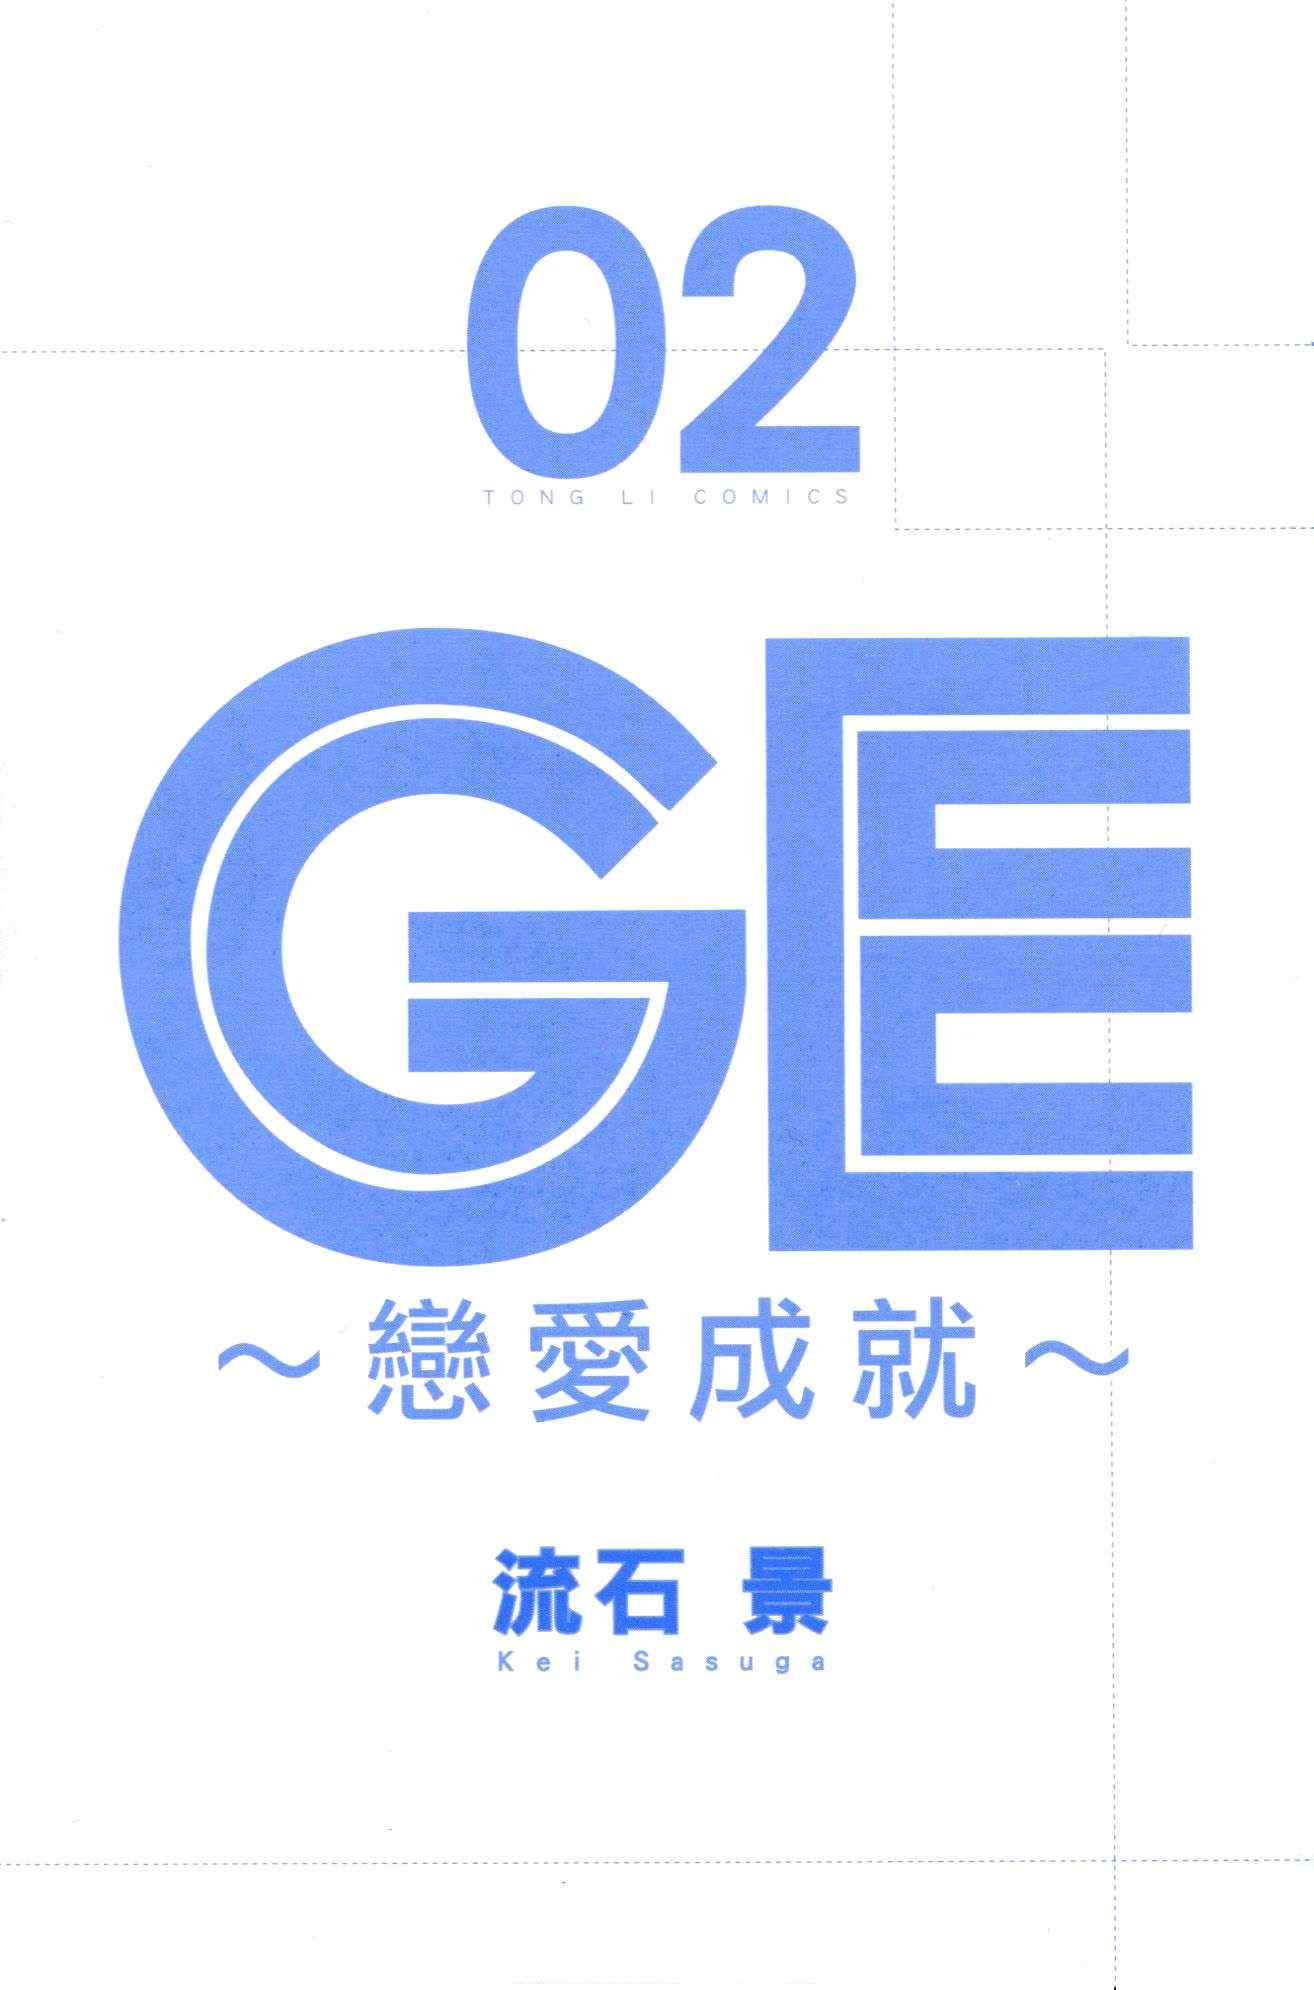 《GE good ending》漫画 ge02卷